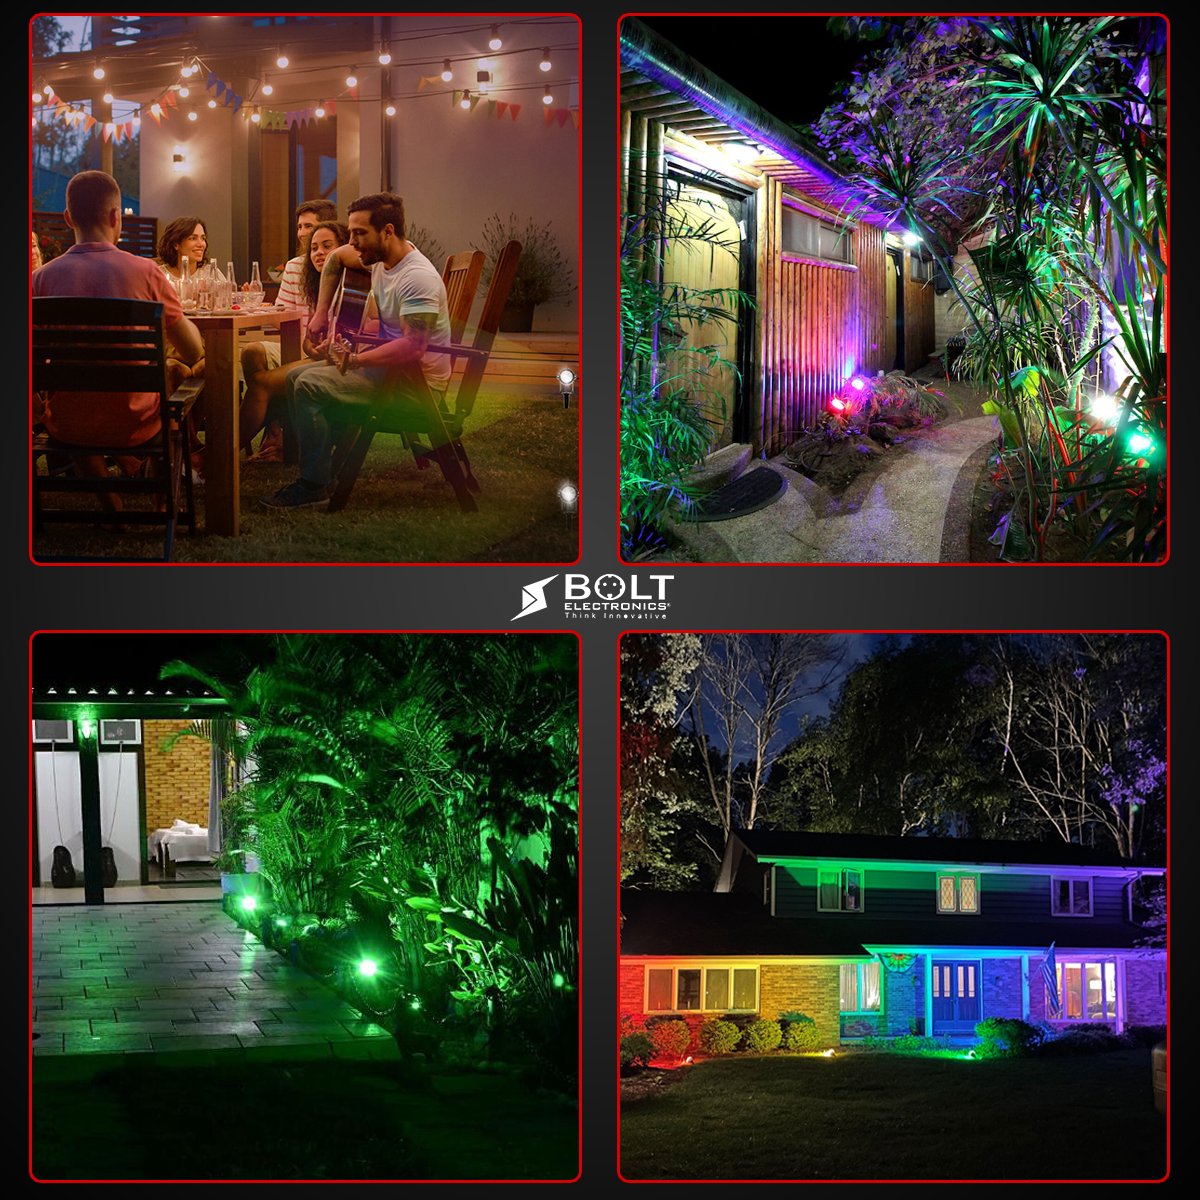 Bolt Electronics®️ RGB LED tuinverlichting Prikspot buitenlamp 1 stuk